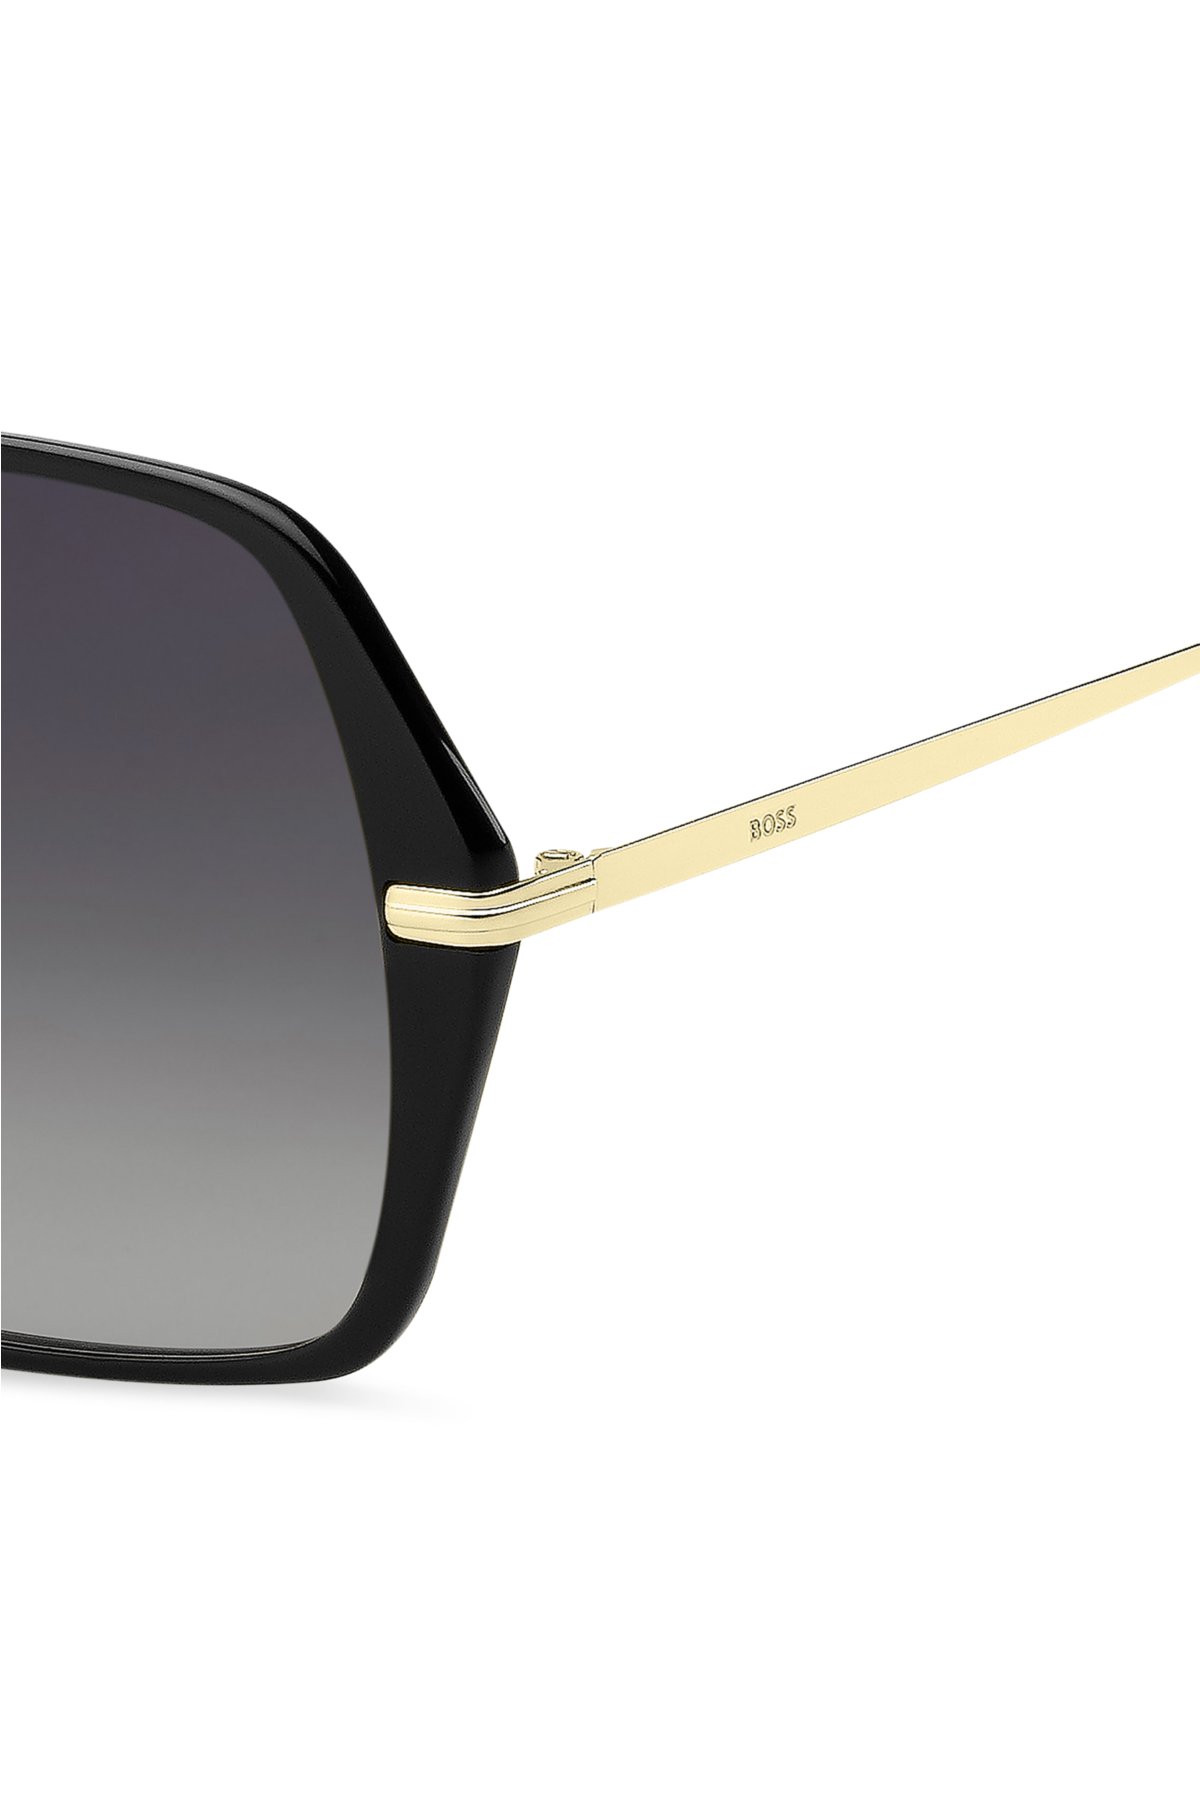 Black-acetate sunglasses with gold-tone temples, Black